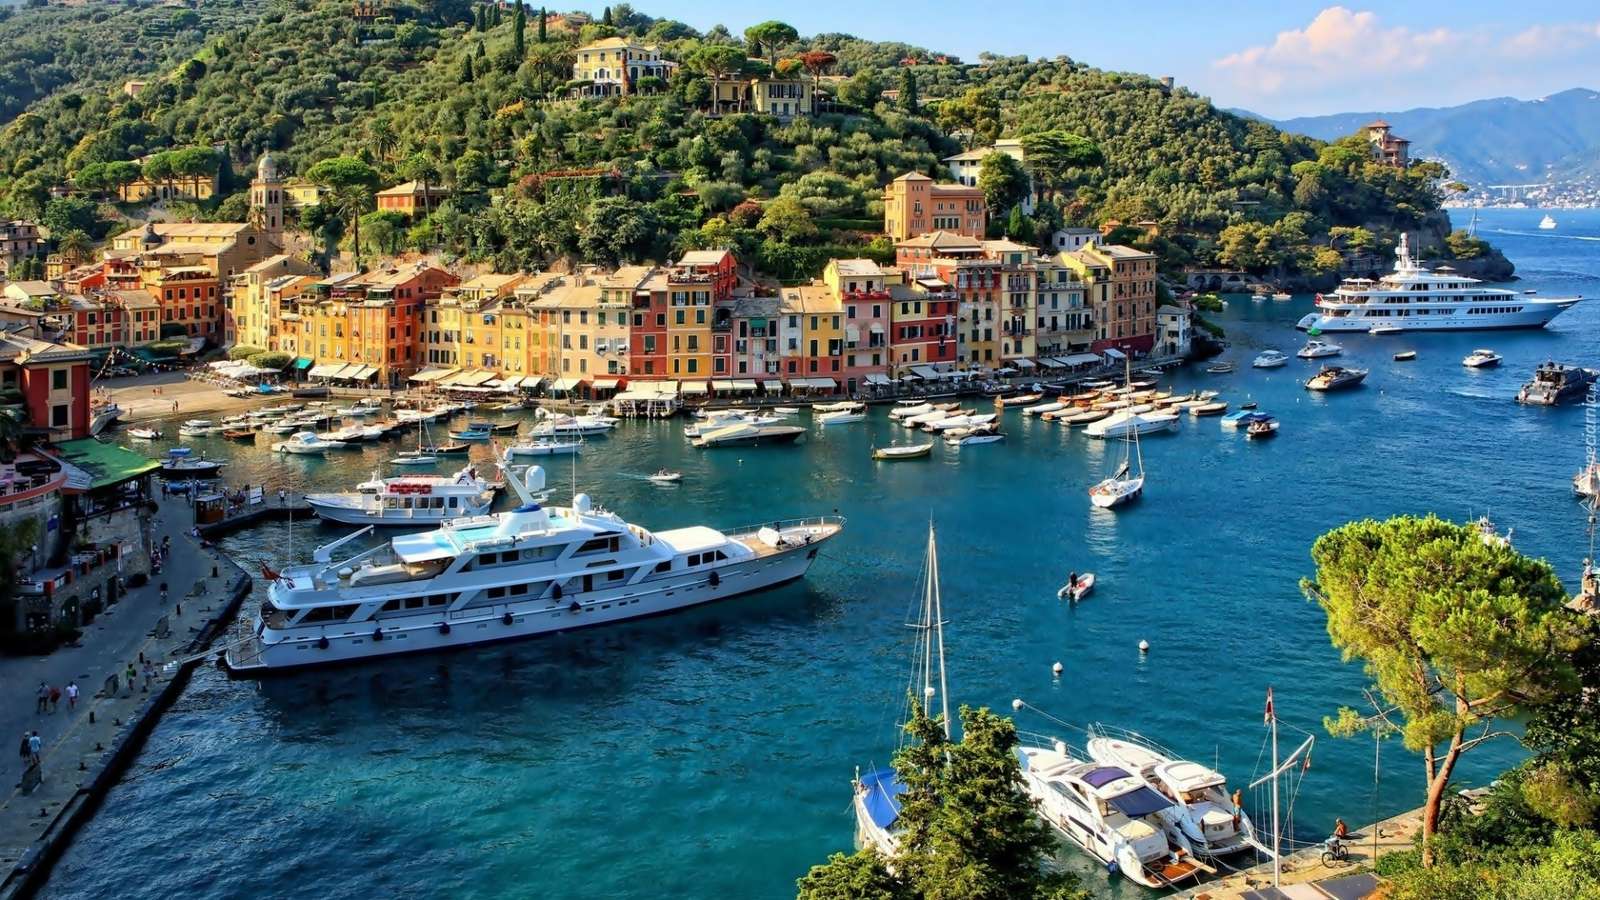 The town of Portofino - Italy online puzzle